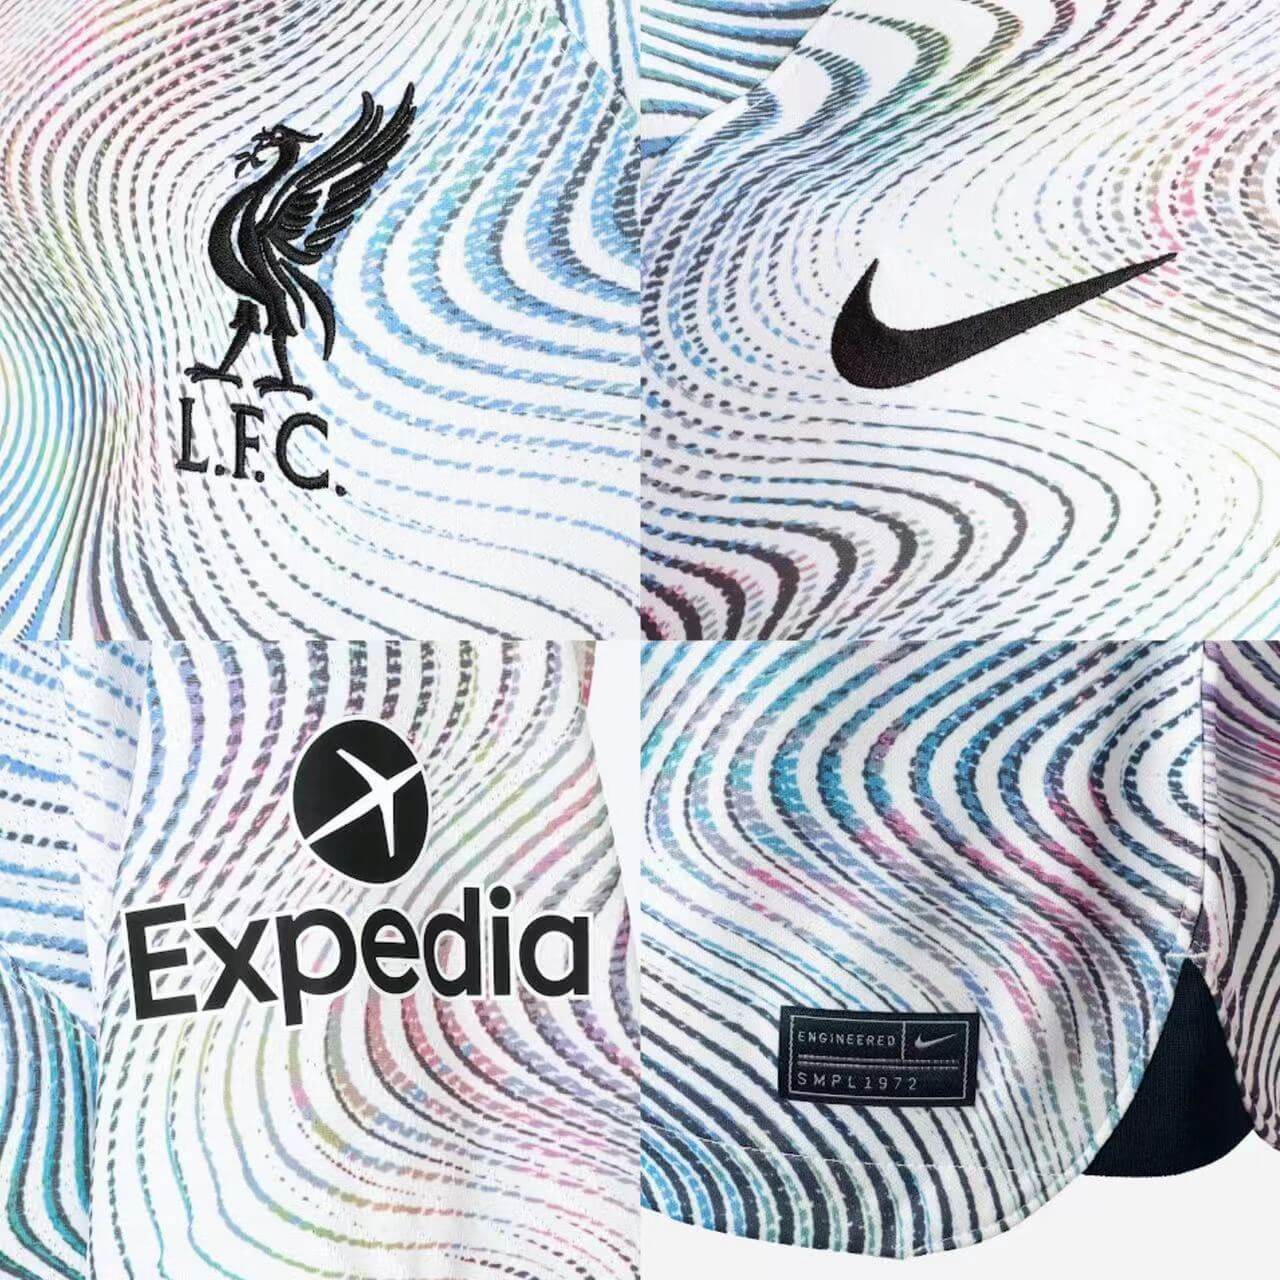 Liverpool new away kit